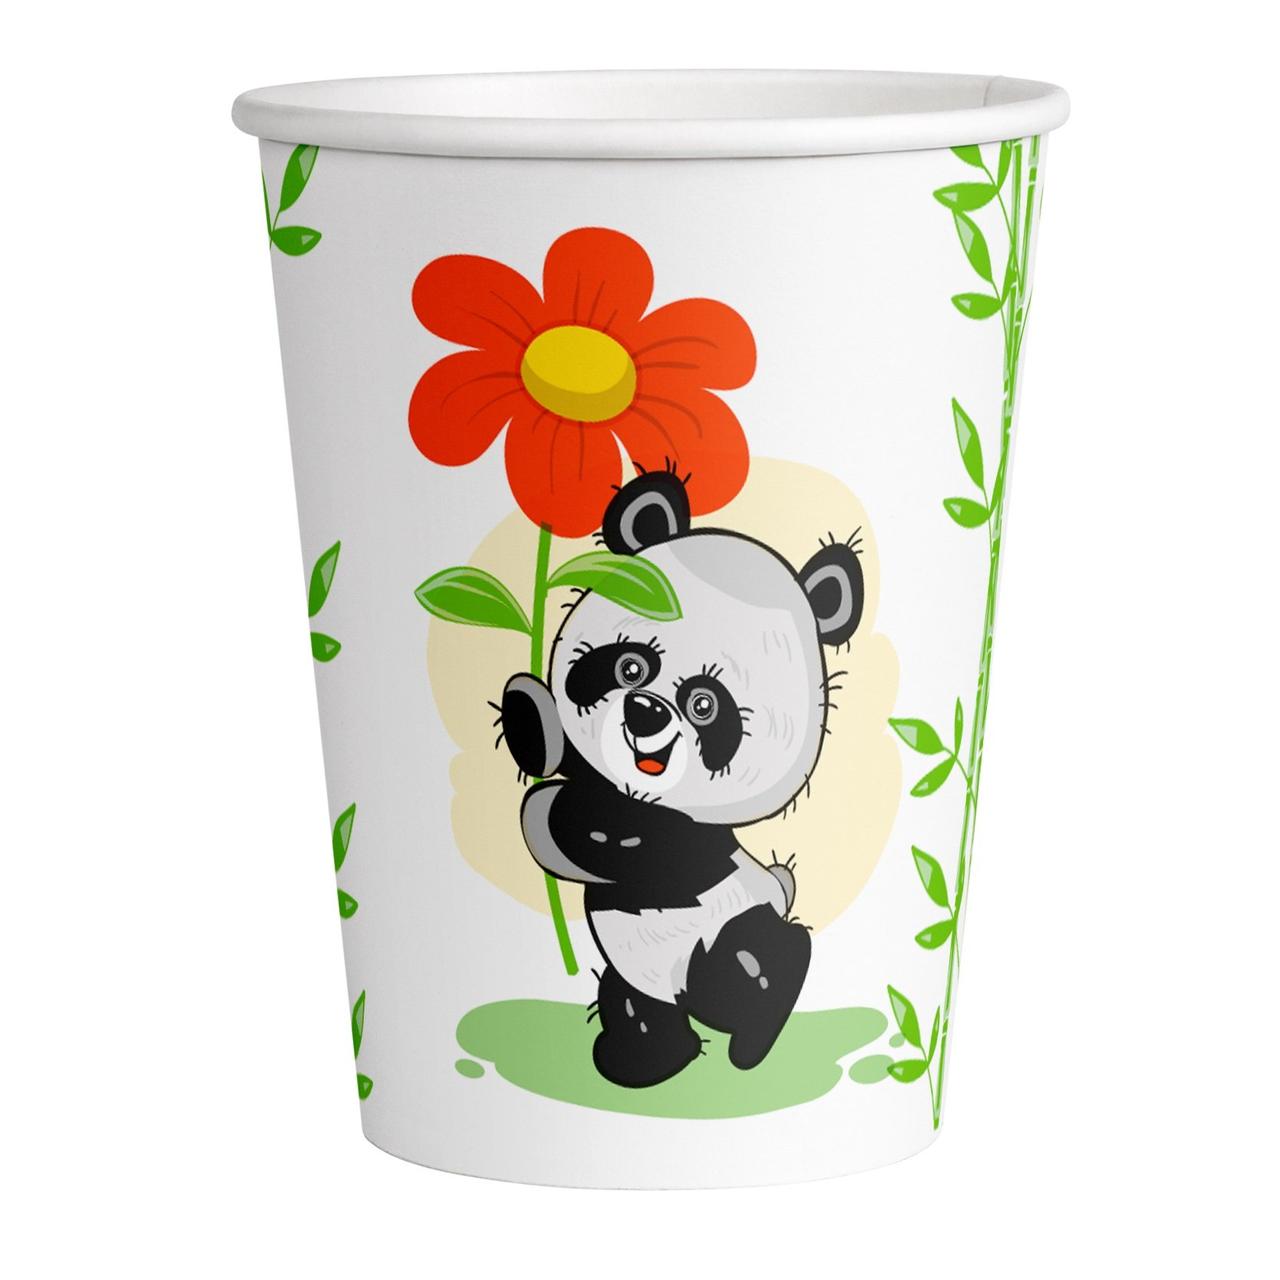 Стакан д/хол./гор., 0.25л, верх. d 80мм нижн. d 56мм, h 88мм, 290г/м2, с печатью "Веселая панда", однослойный картон, картон